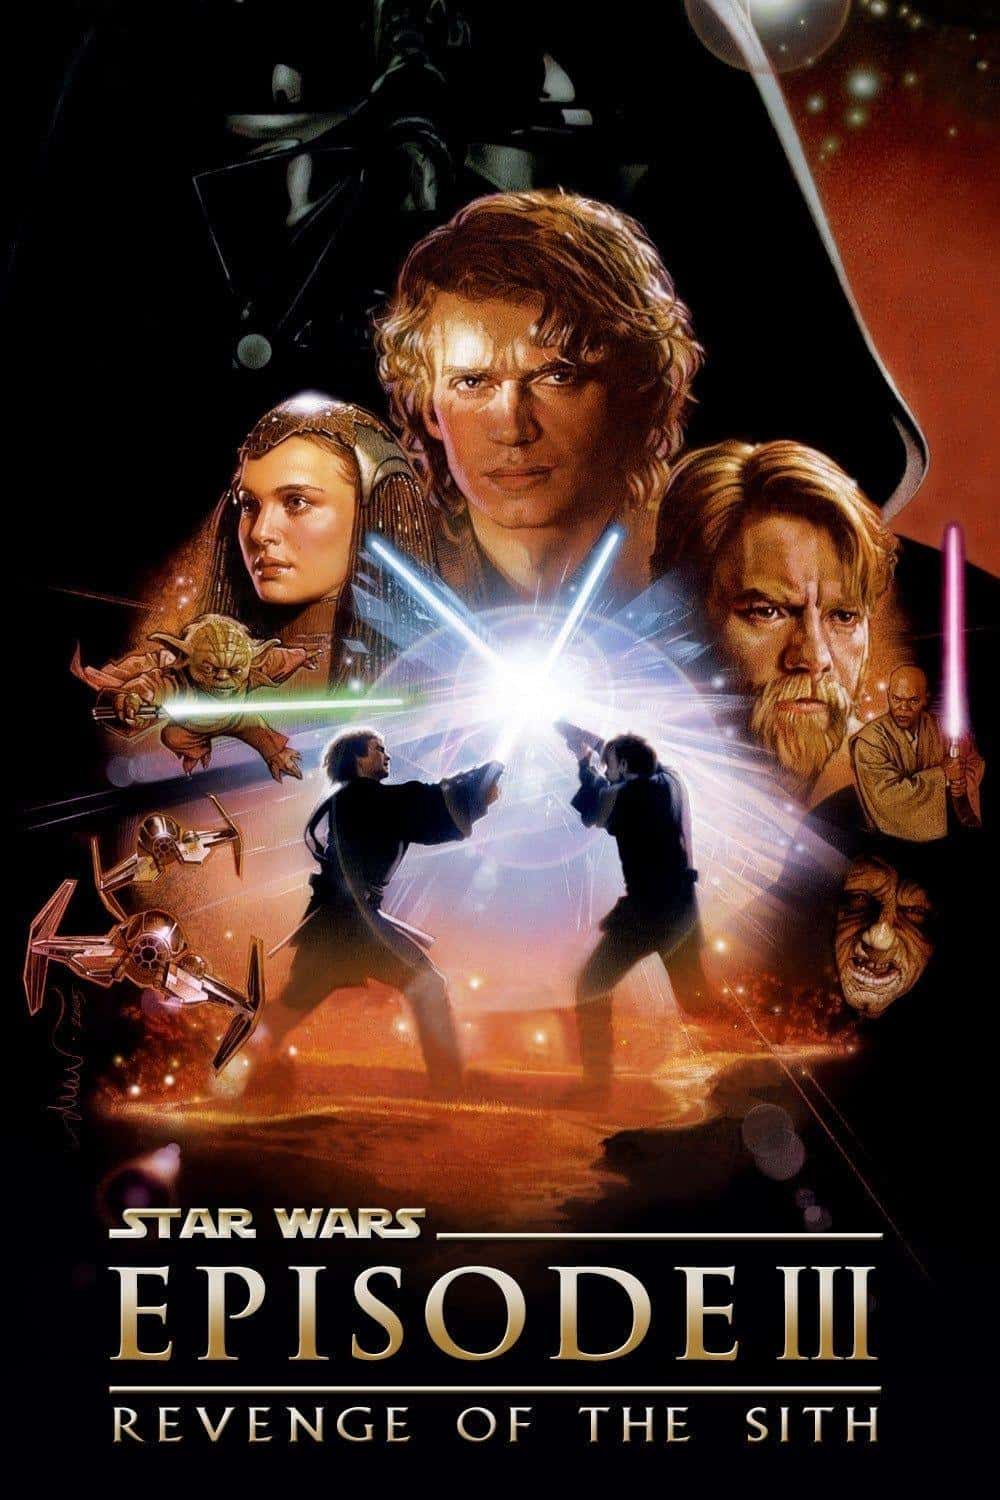 star wars the force awakens free full movie putlockers